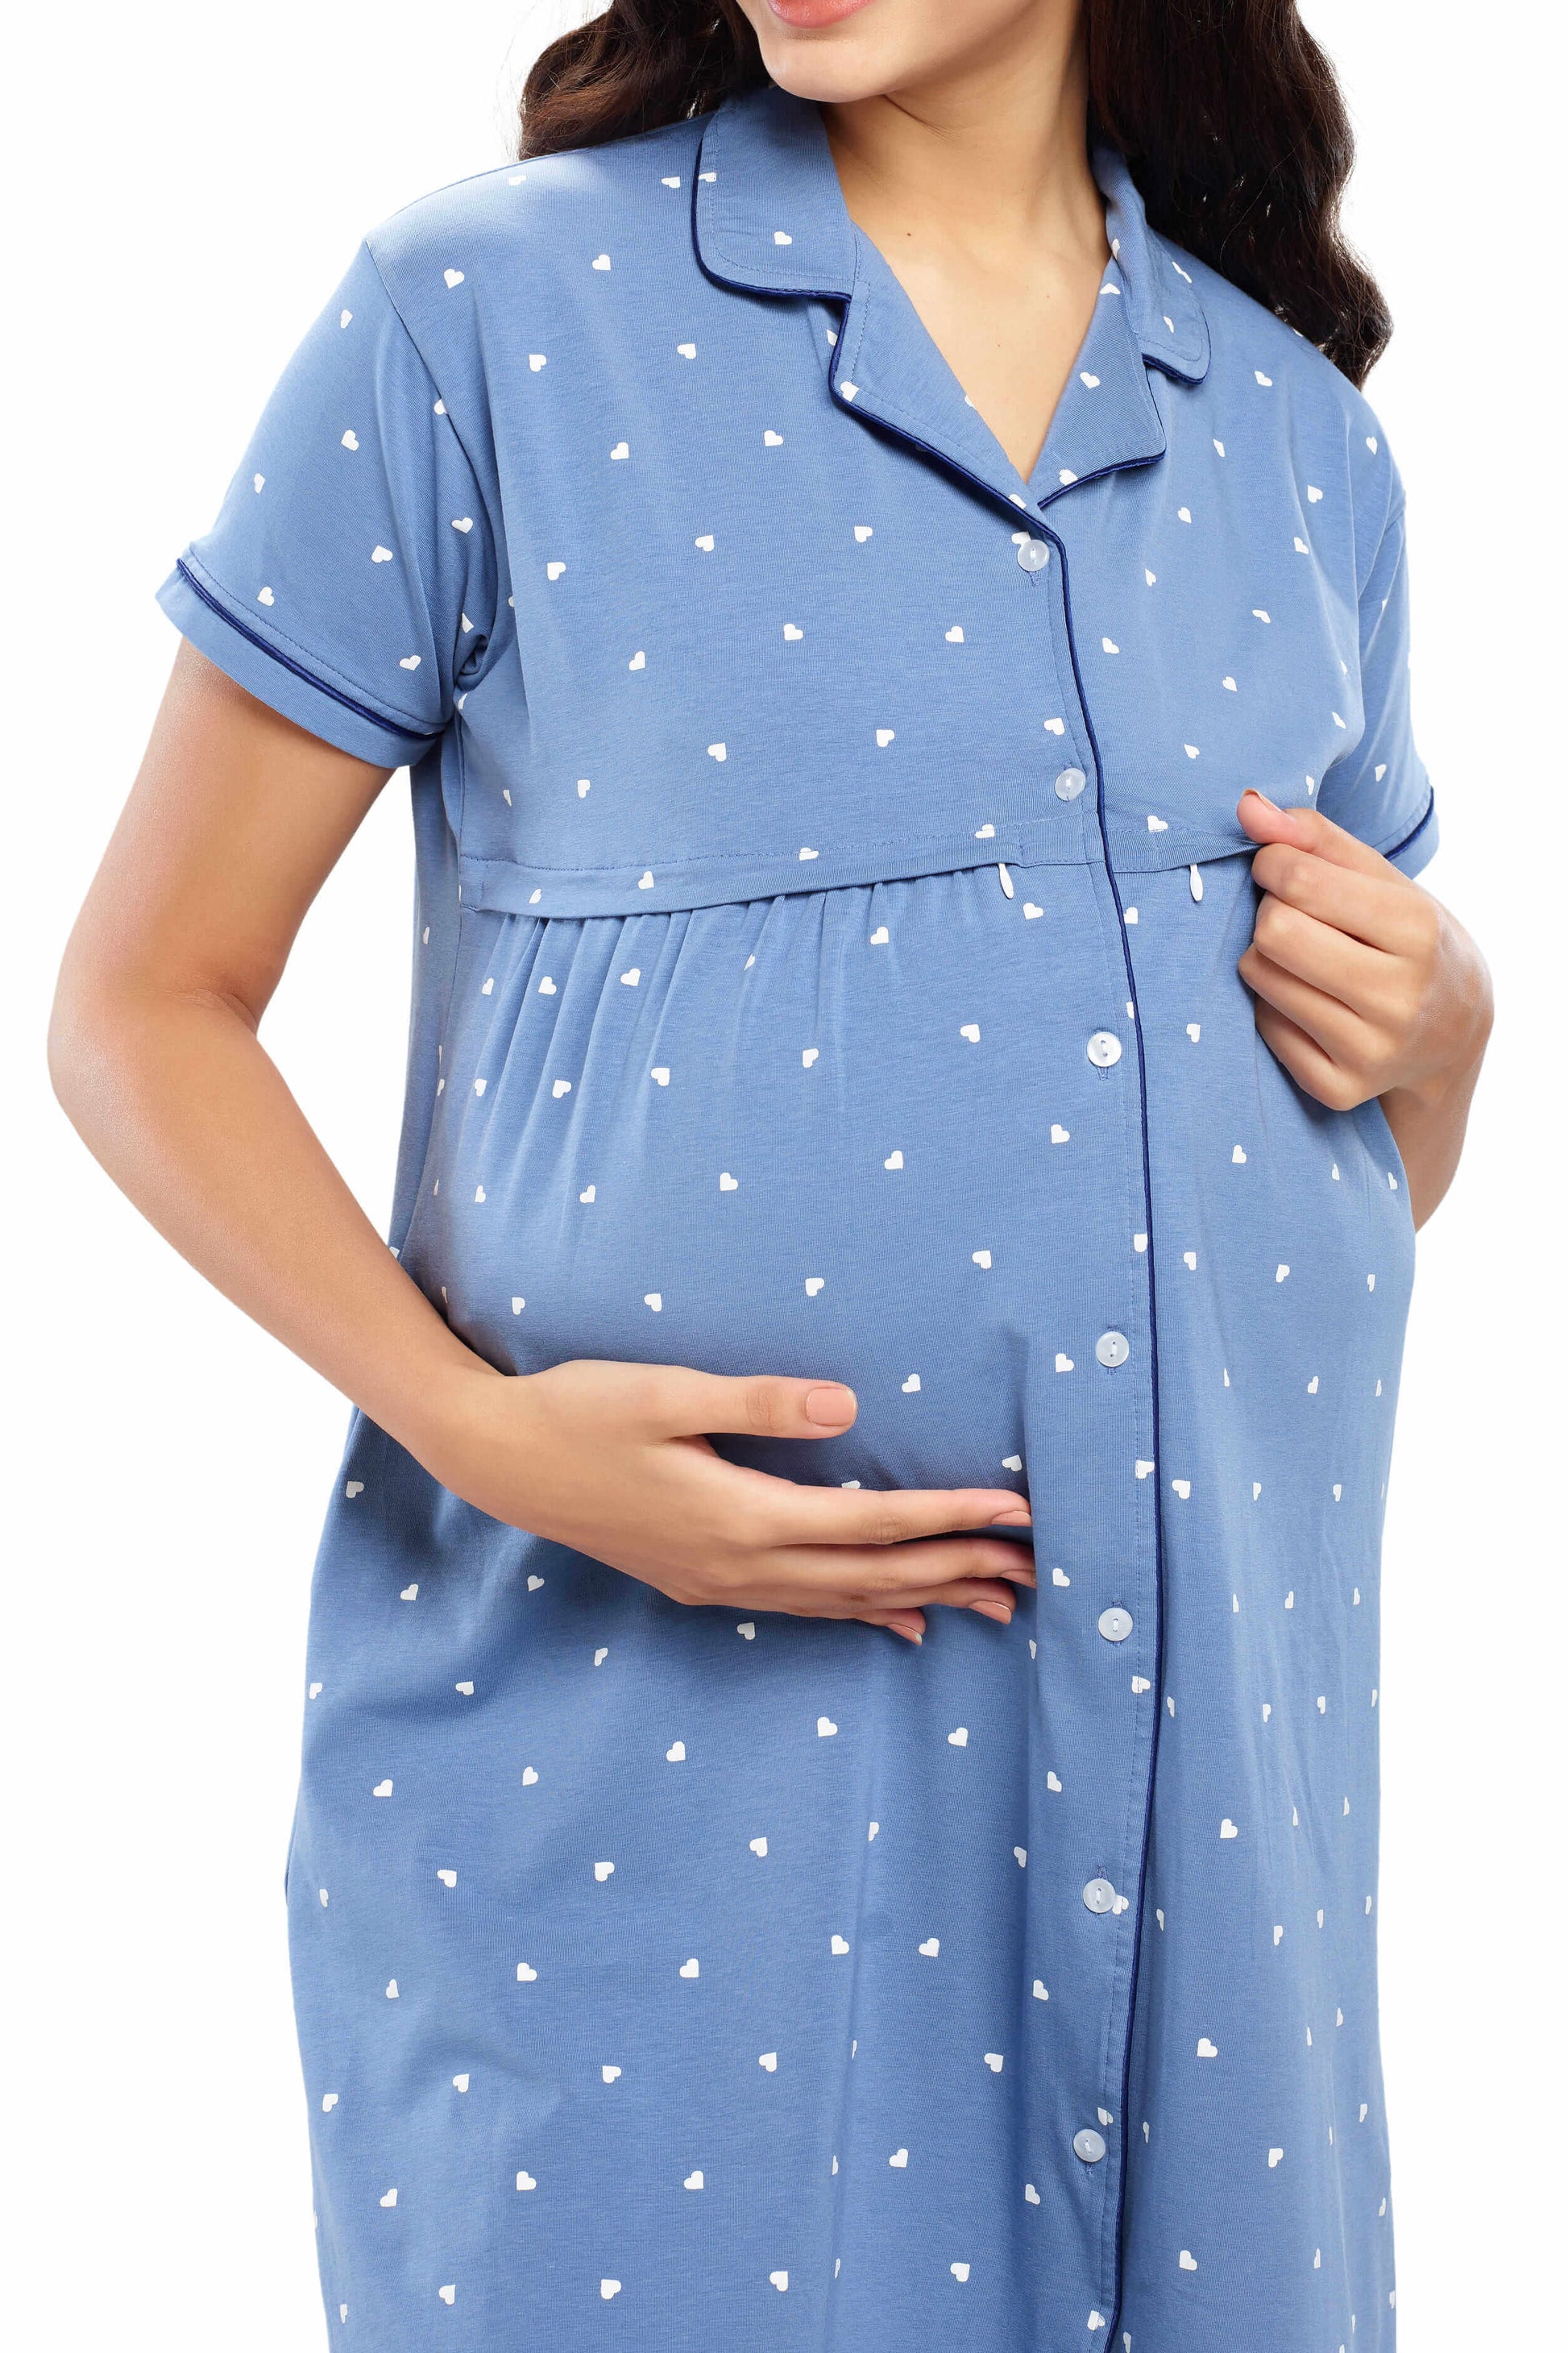 Cotton Gauze Blouse, Maternity & Nursing Special - blue bright solid